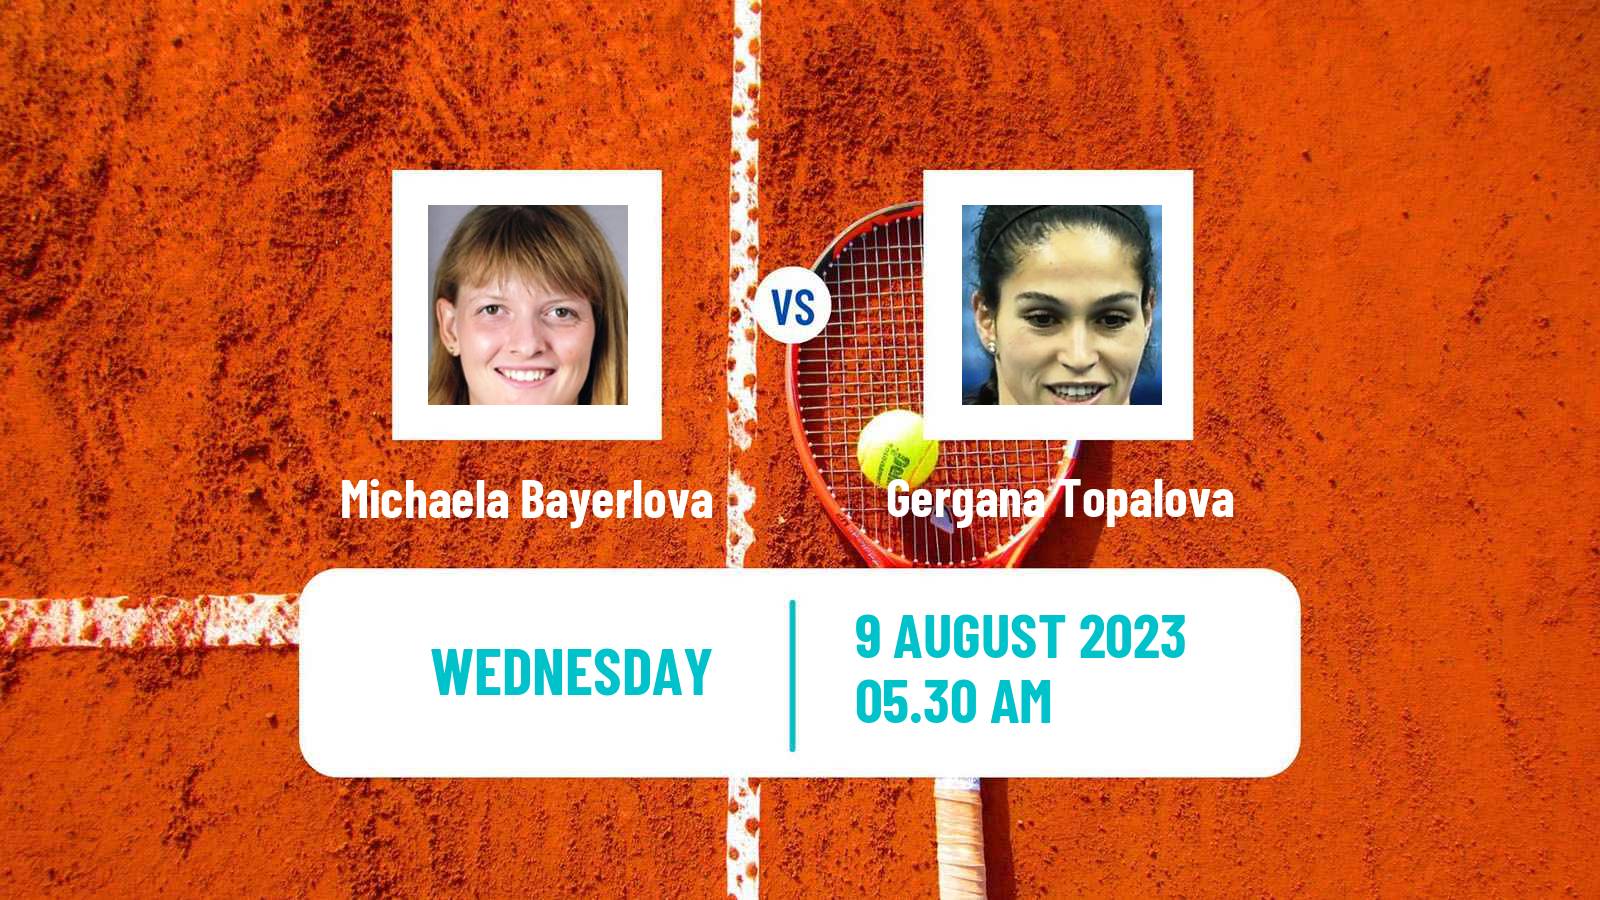 Tennis ITF W25 Koksijde Women Michaela Bayerlova - Gergana Topalova